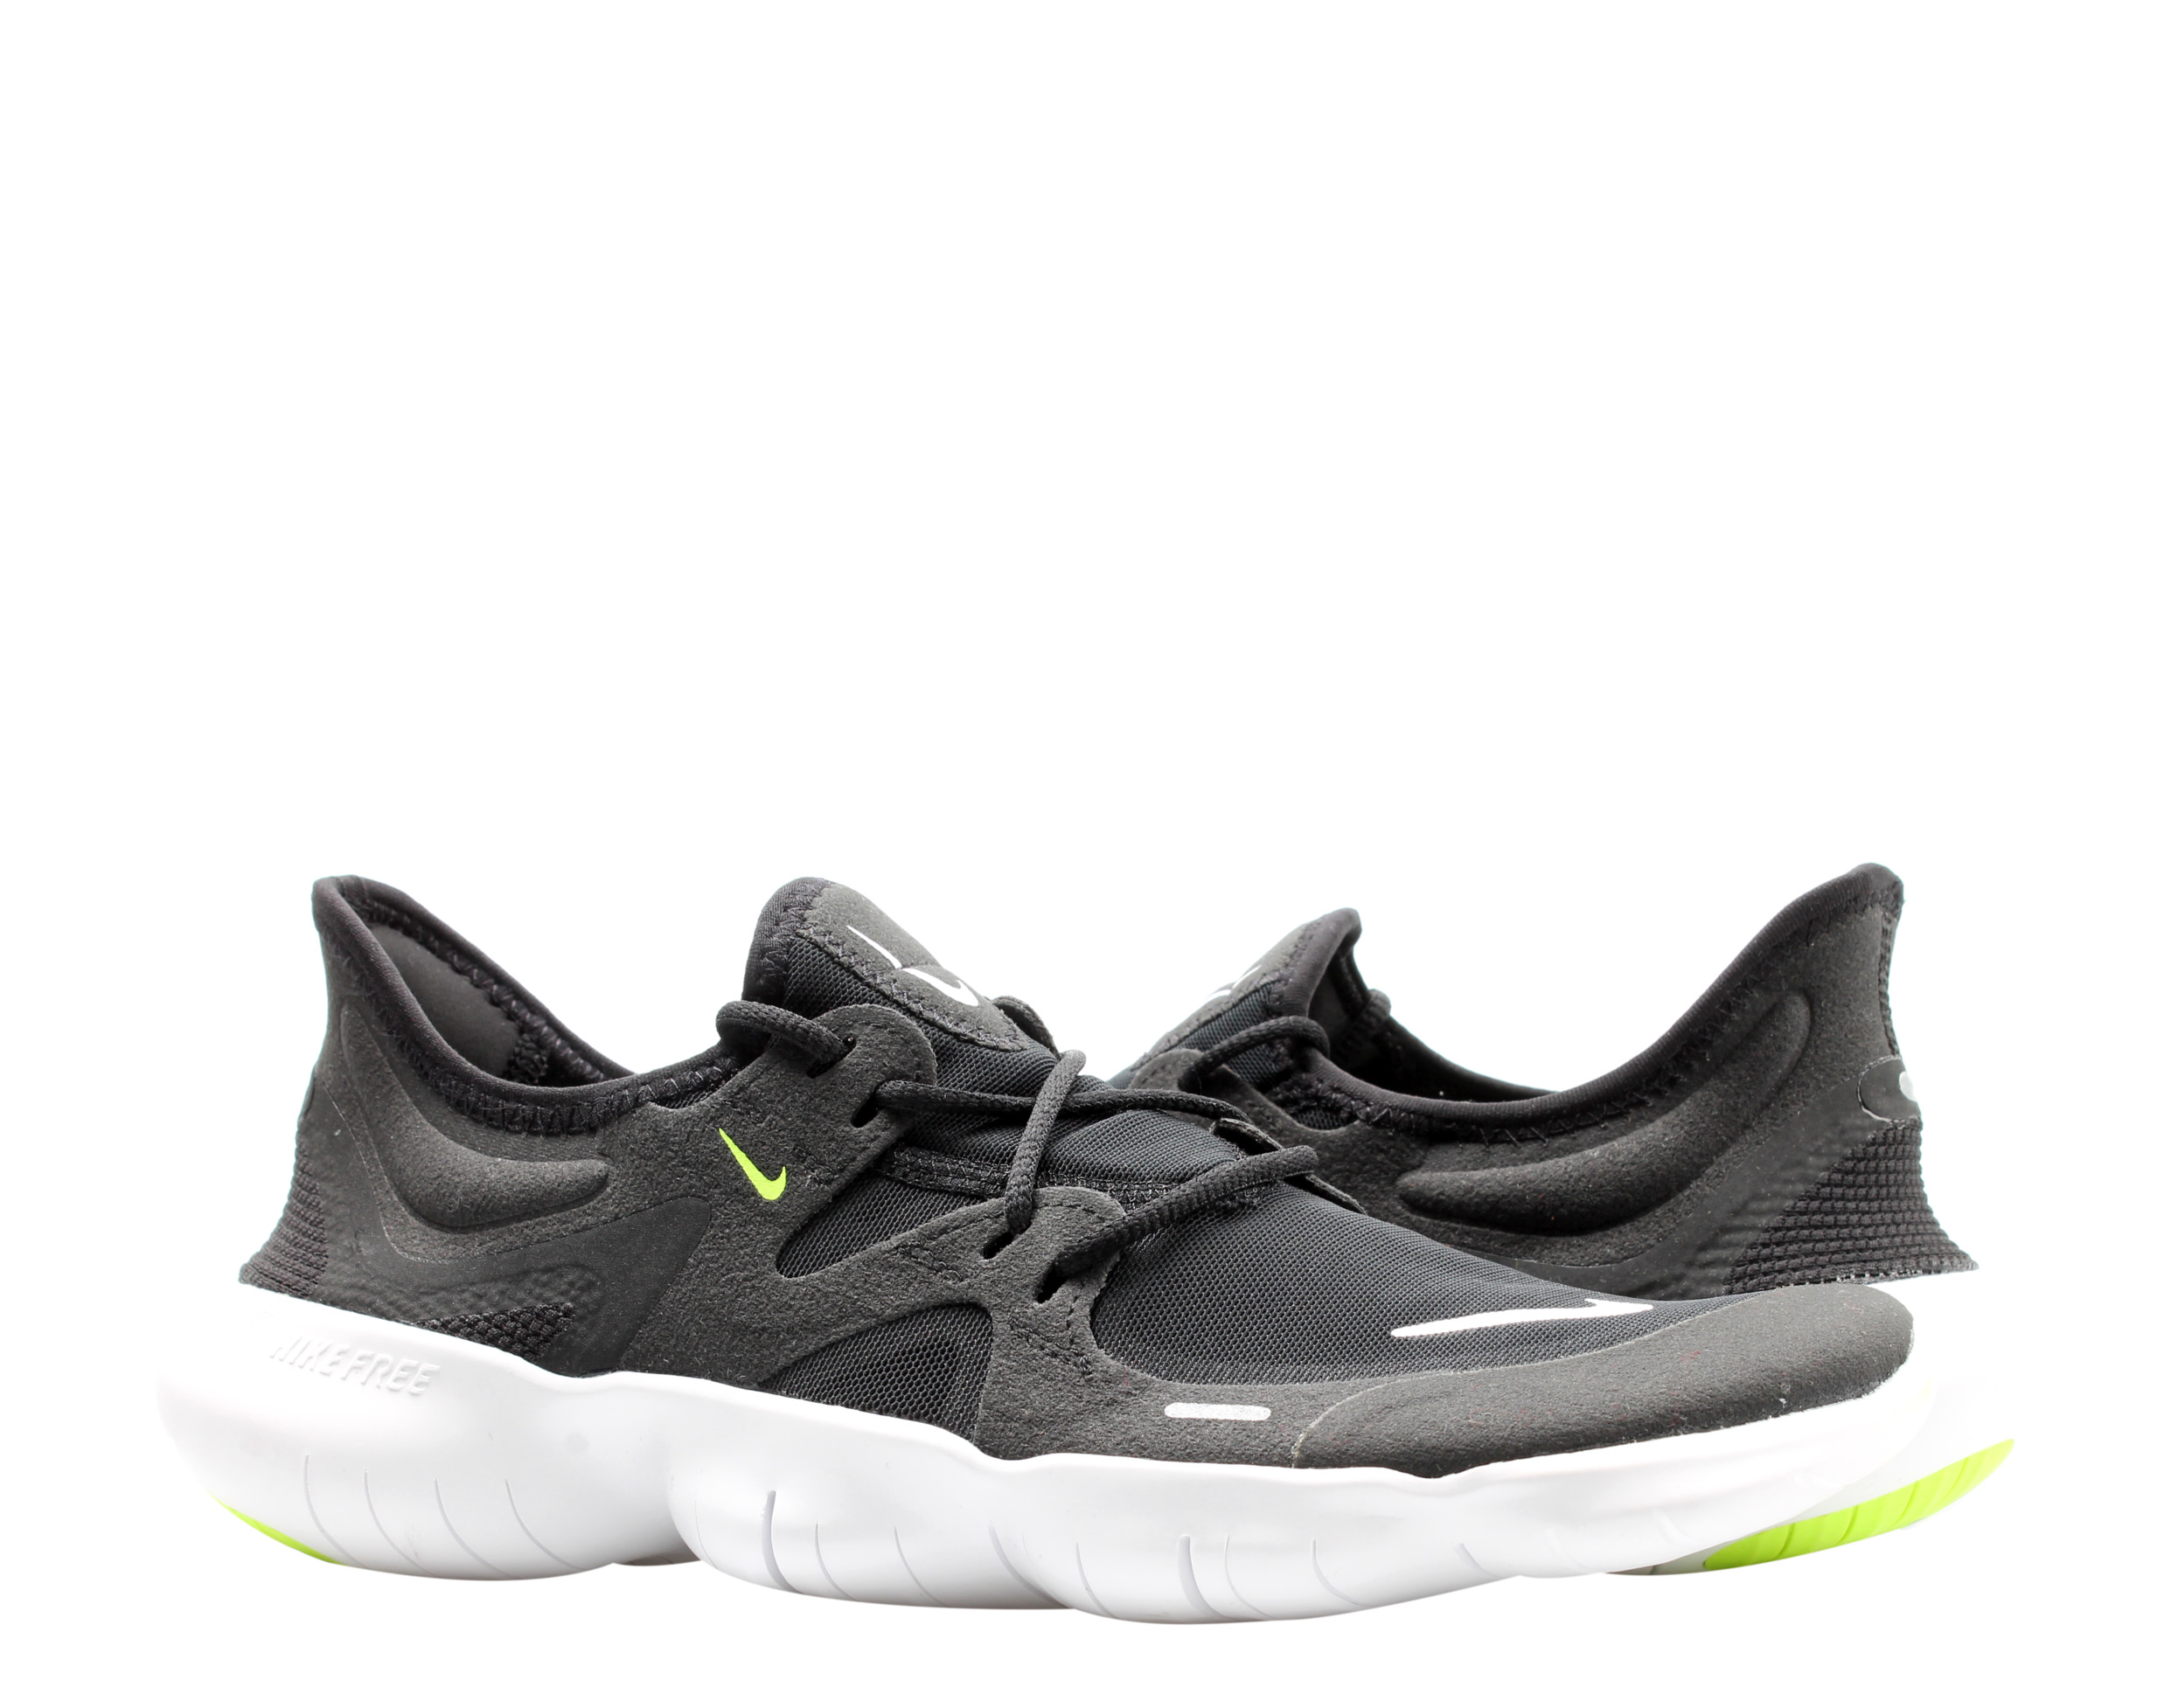 Nike Free RN Black/White-Anthracite-Volt Men's Running Shoes AQ1289-003